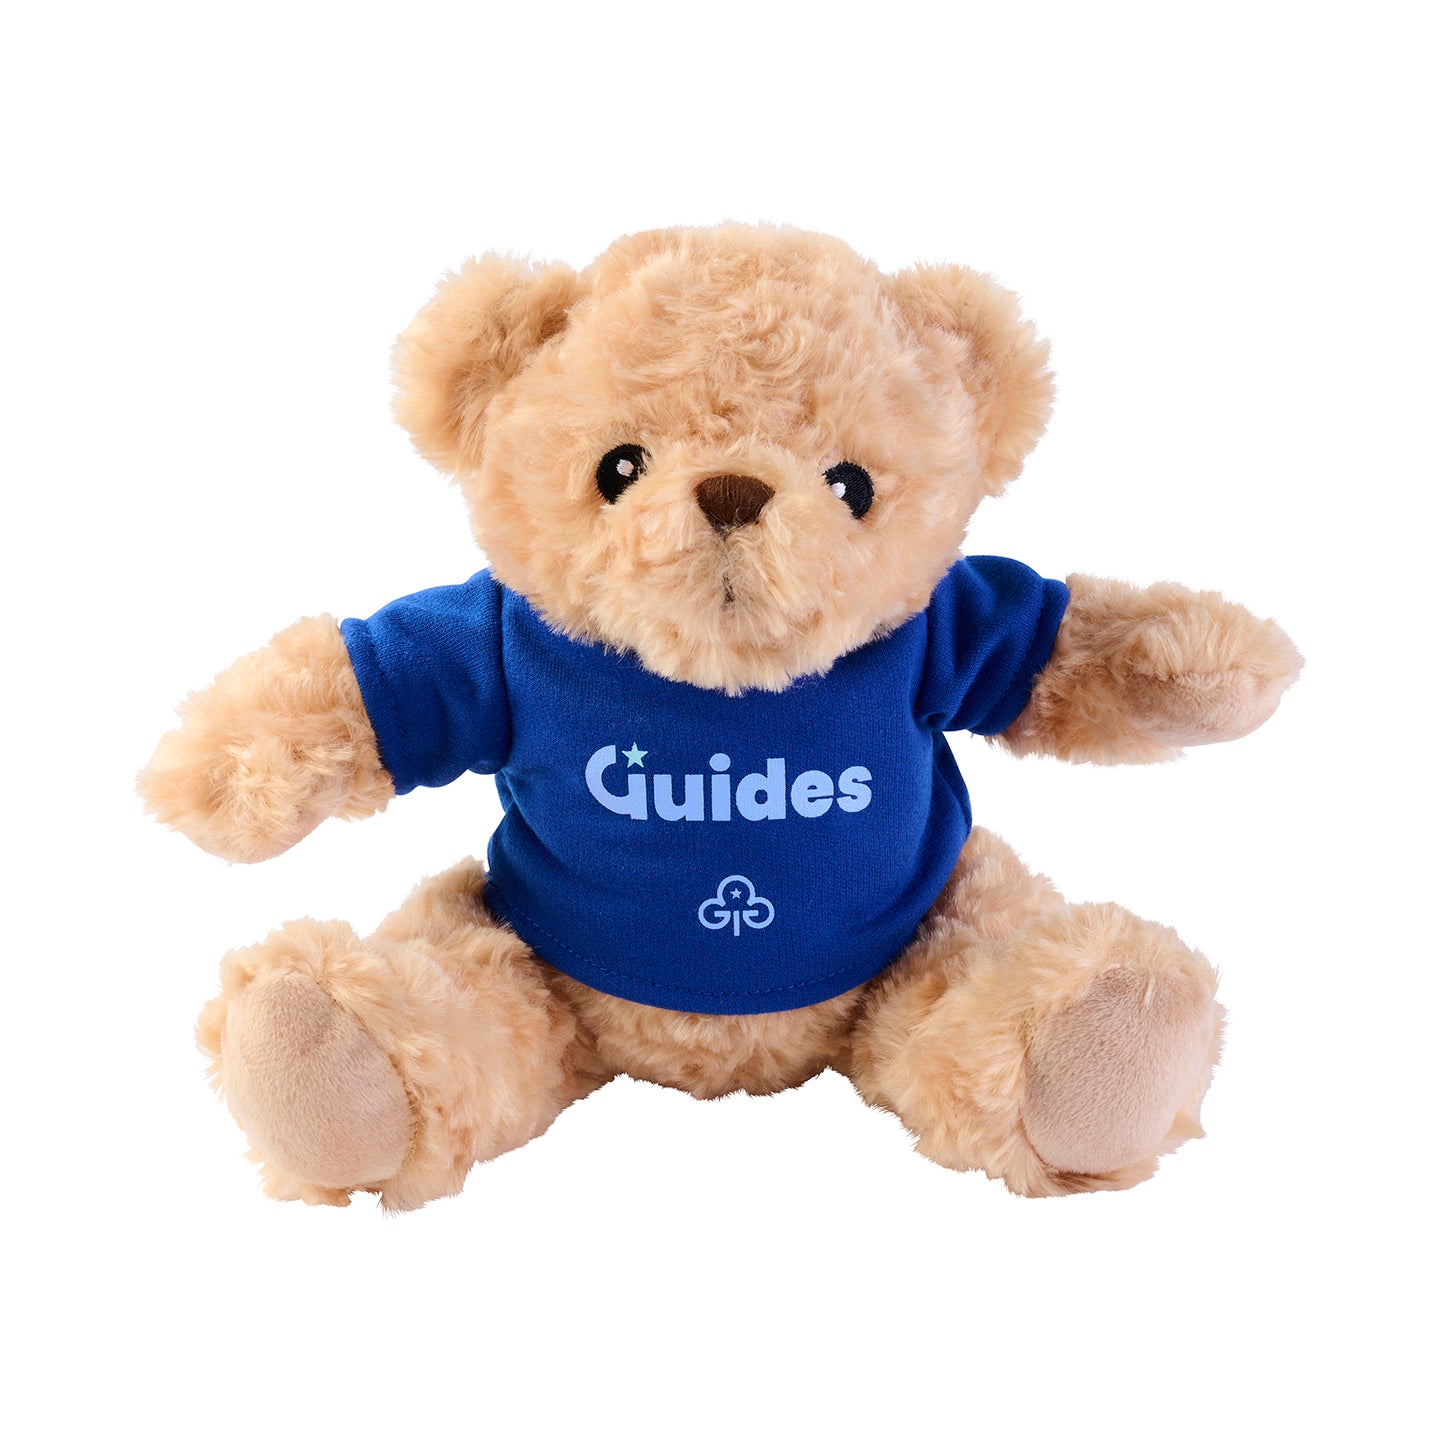 Guides Teddy Bear